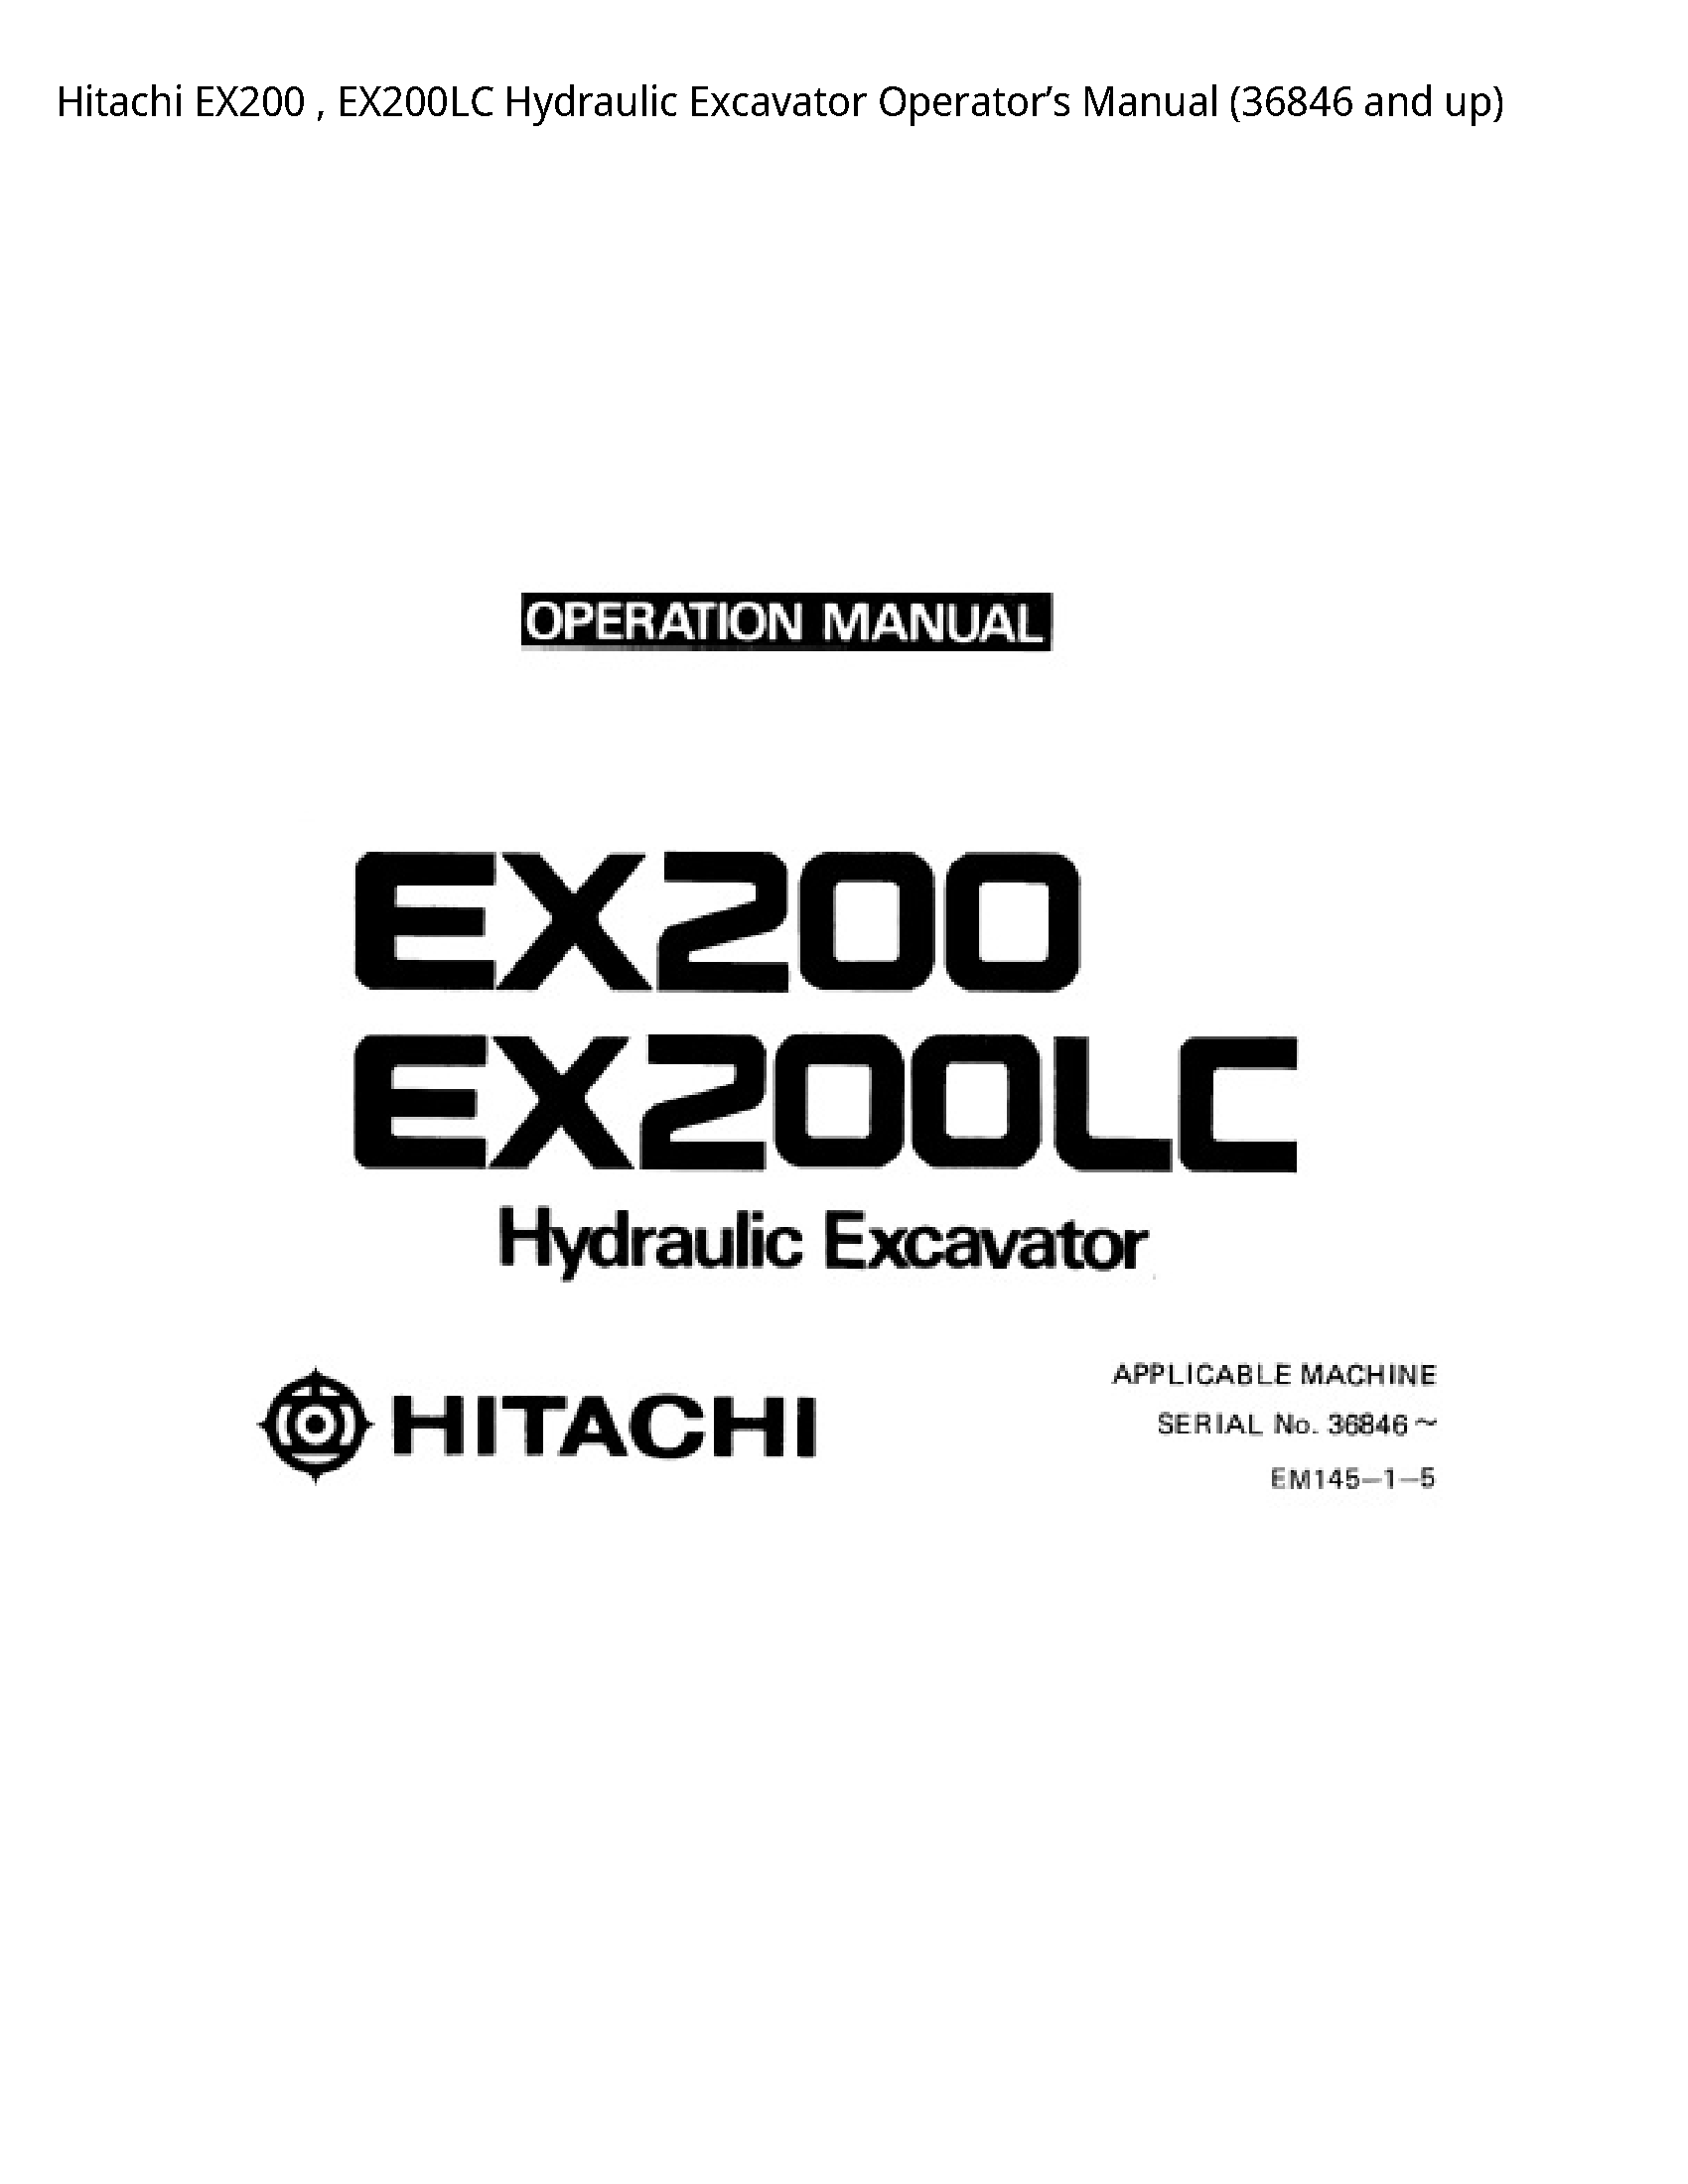 Hitachi EX200 Hydraulic Excavator Operator’s manual